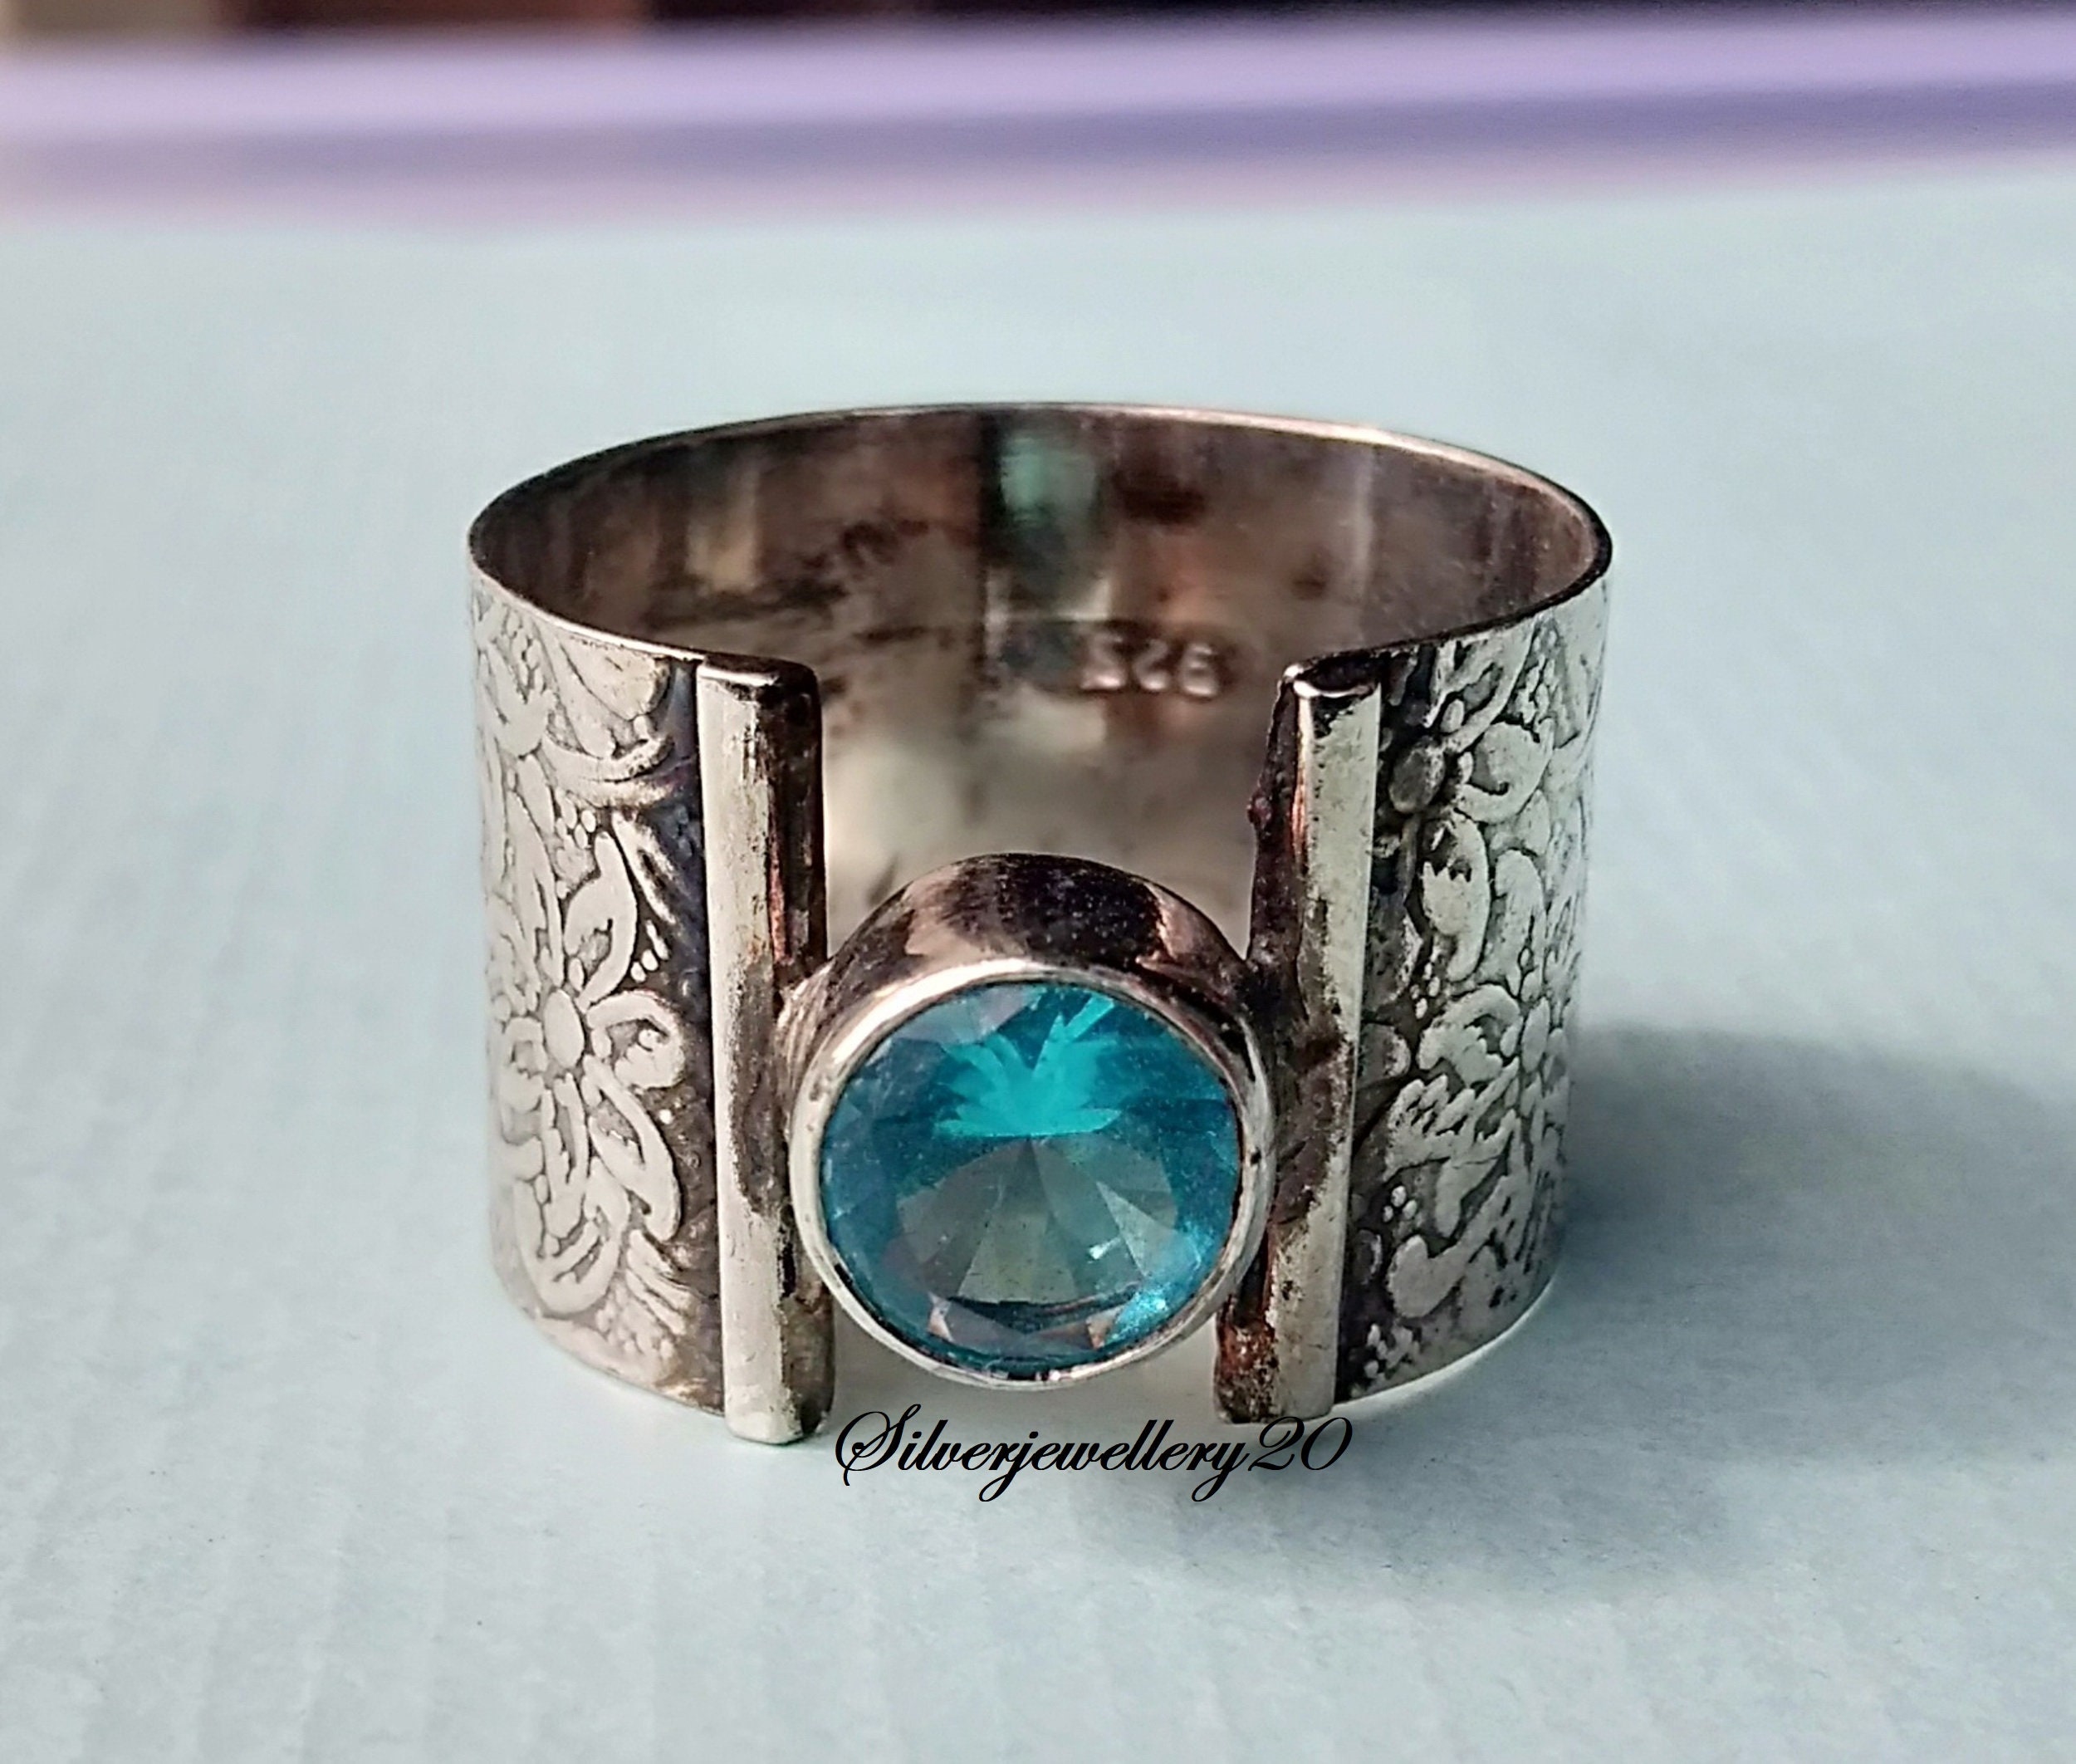 Handmade Ring Promise Ring 925 Sterling Silver Ring Blue Stone Ring Gemstone Ring Worry Ring Blue Turquoise Ring Gift For Her